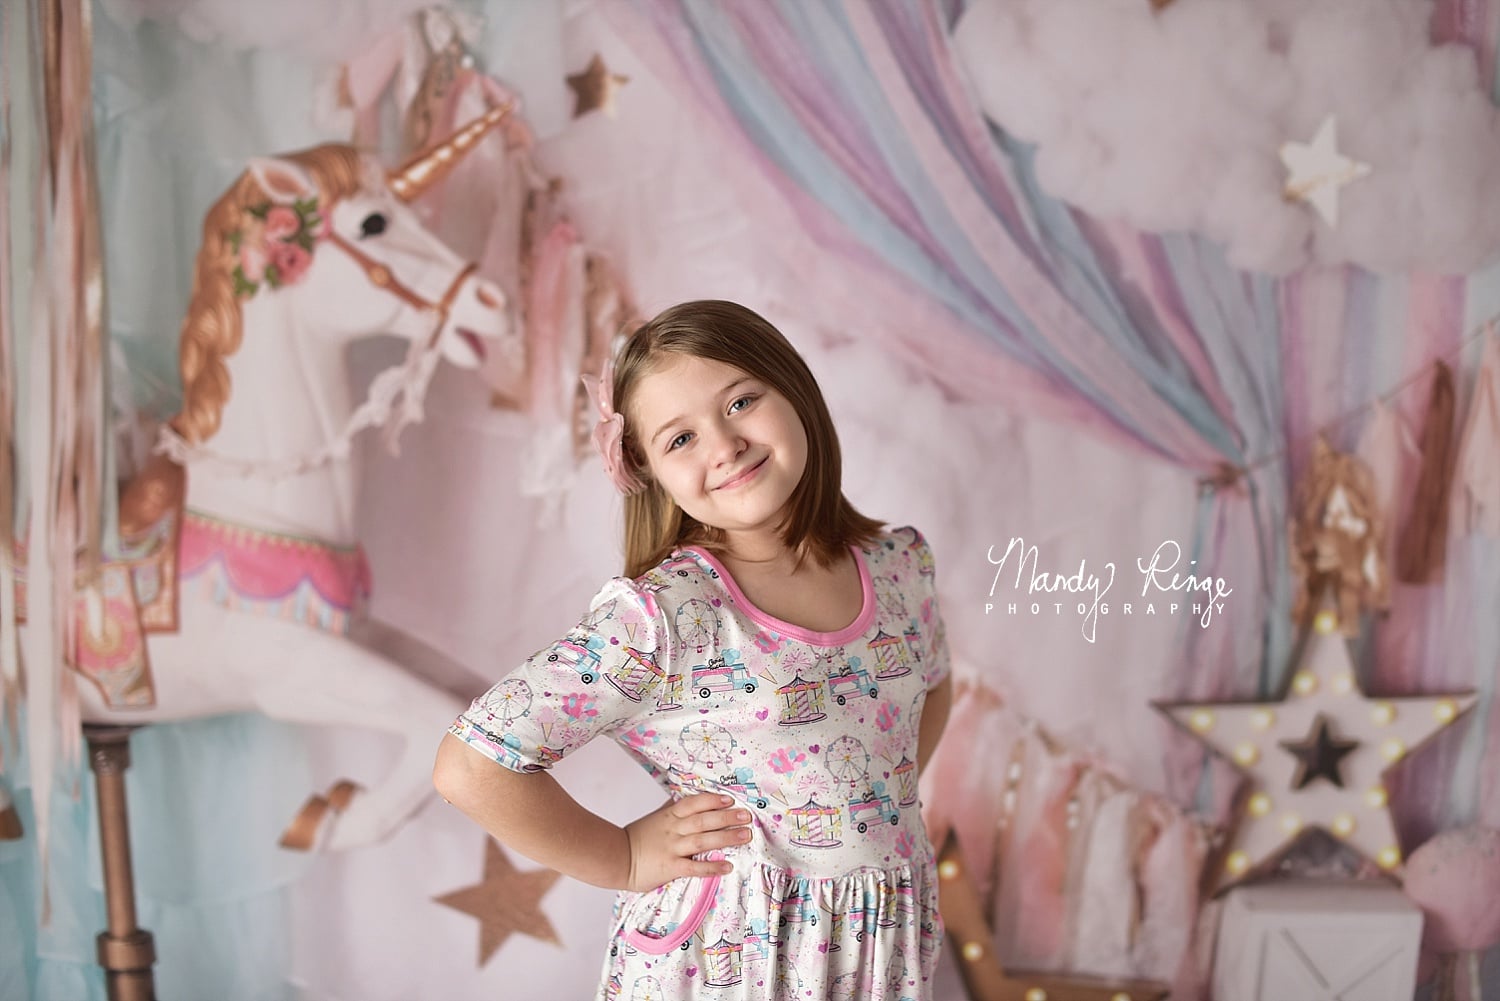 Kate Unicorn Carousel Backdrop Dreams Designed by Mandy Ringe Photography